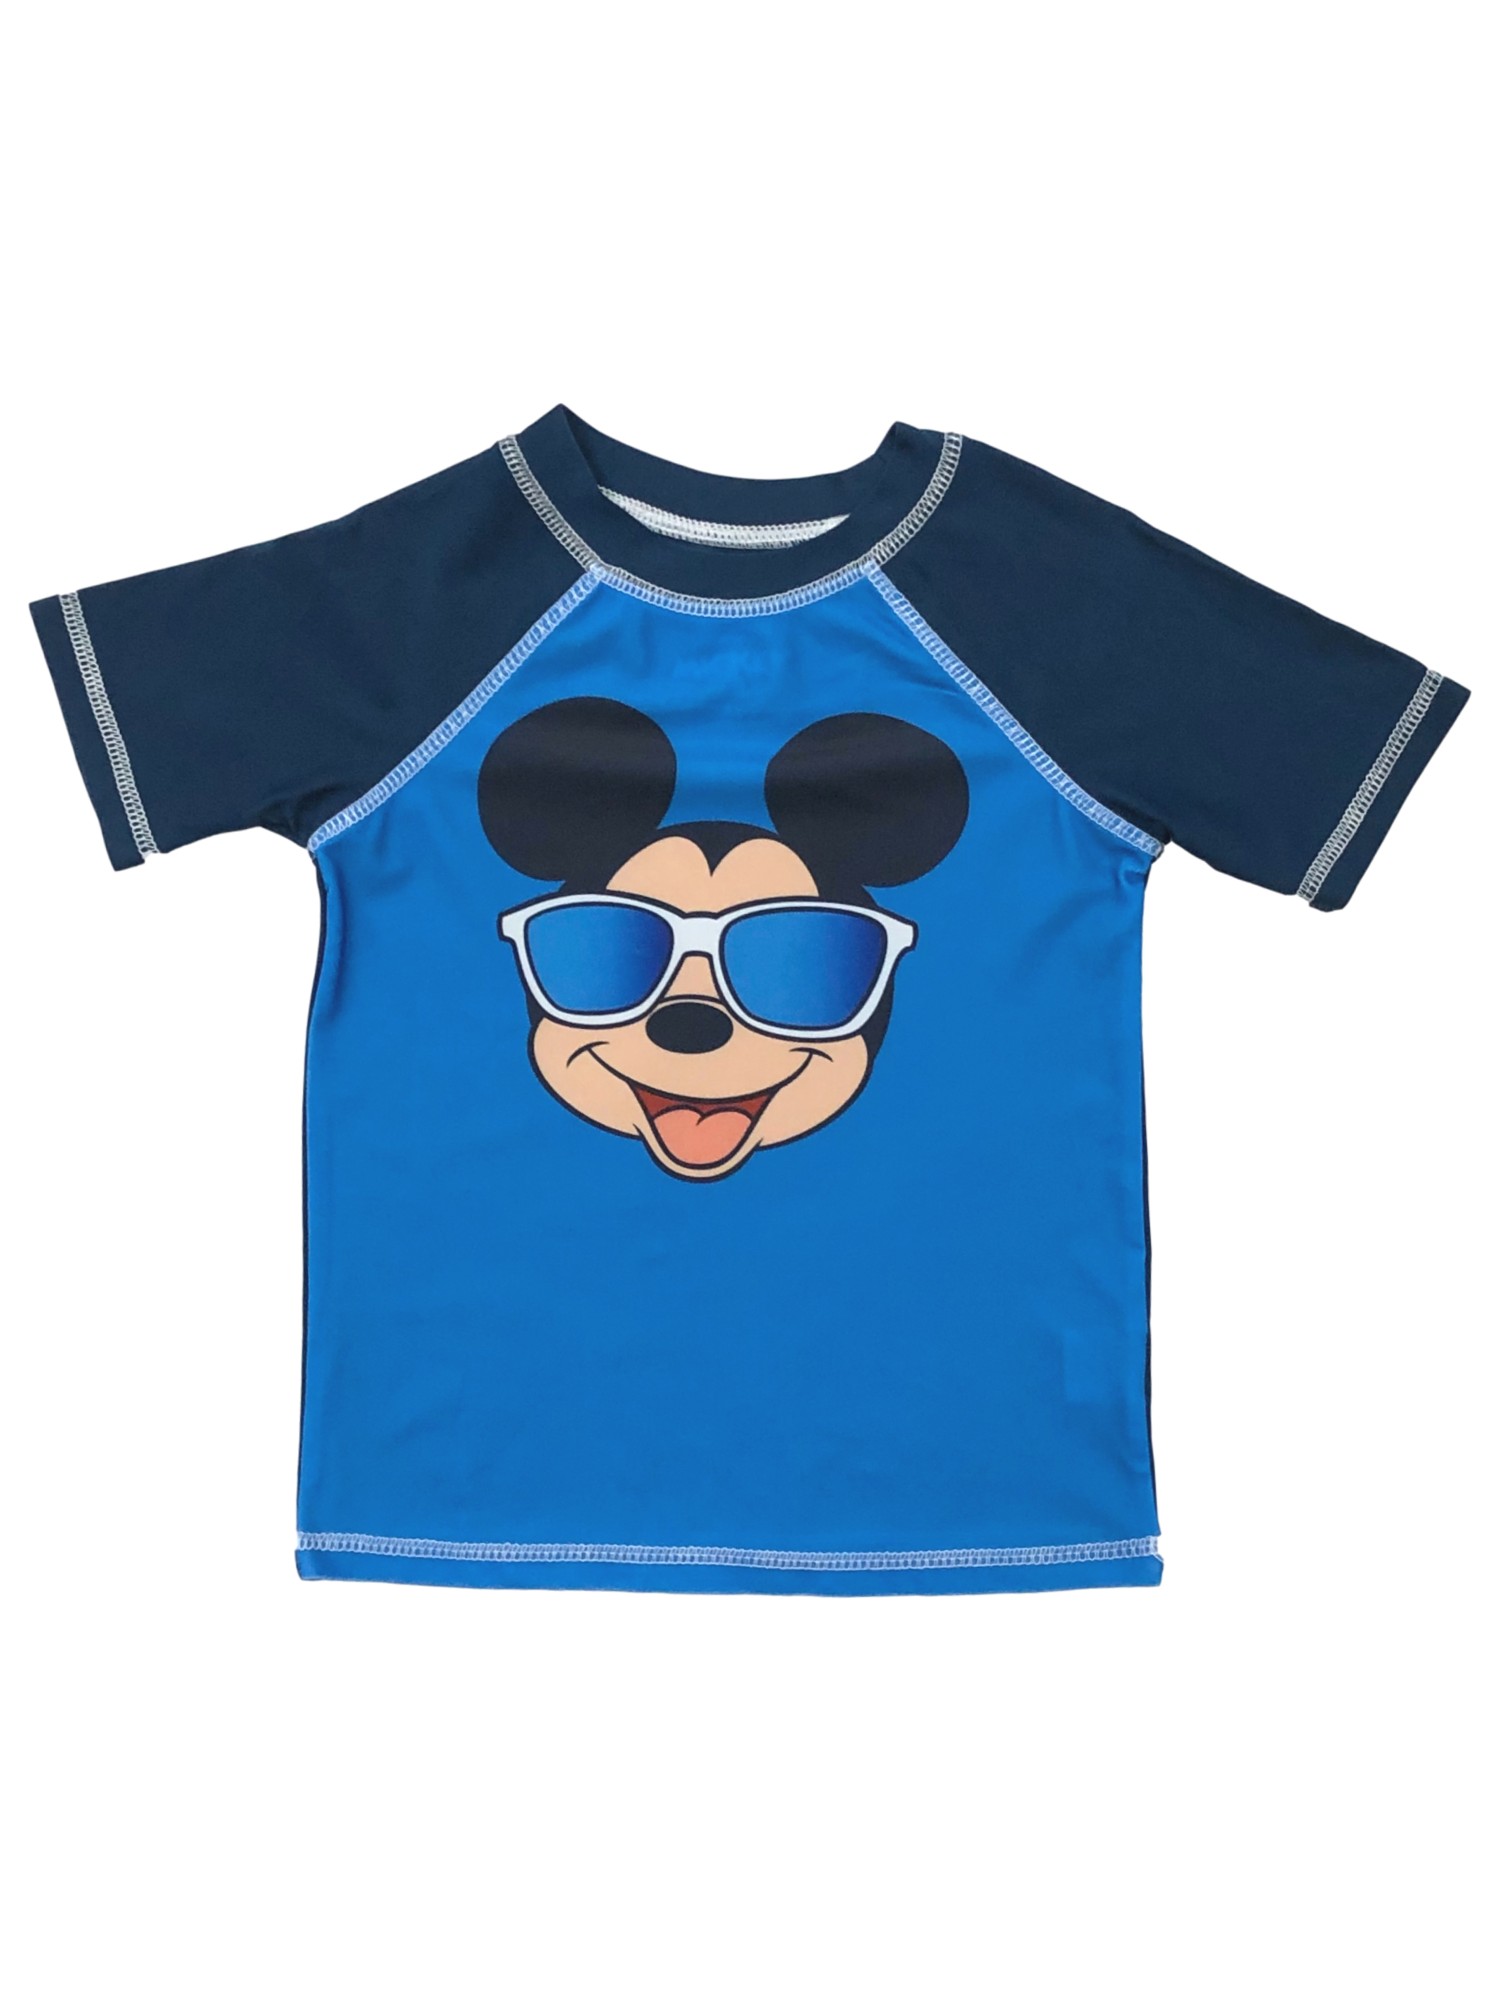 Disney Toddler Boys 2-Tone Blue Mickey Mouse Rash Guard Swim Shirt 4T - image 1 of 3